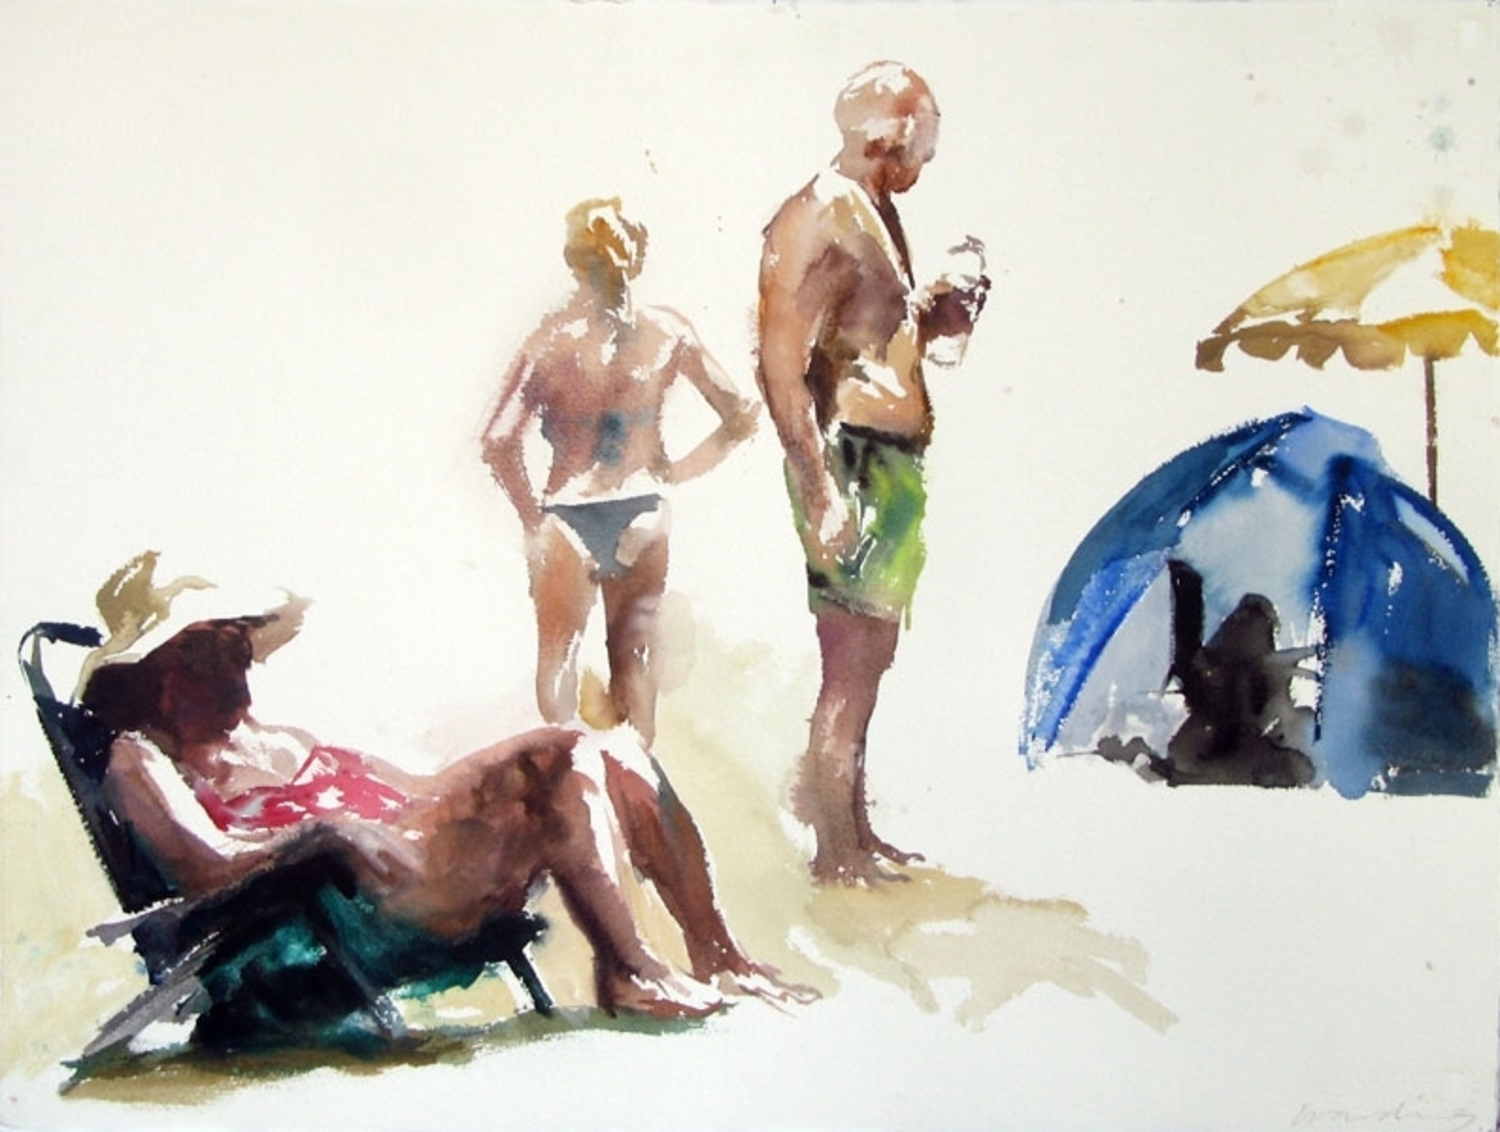 Beach tent, umbrella and figures